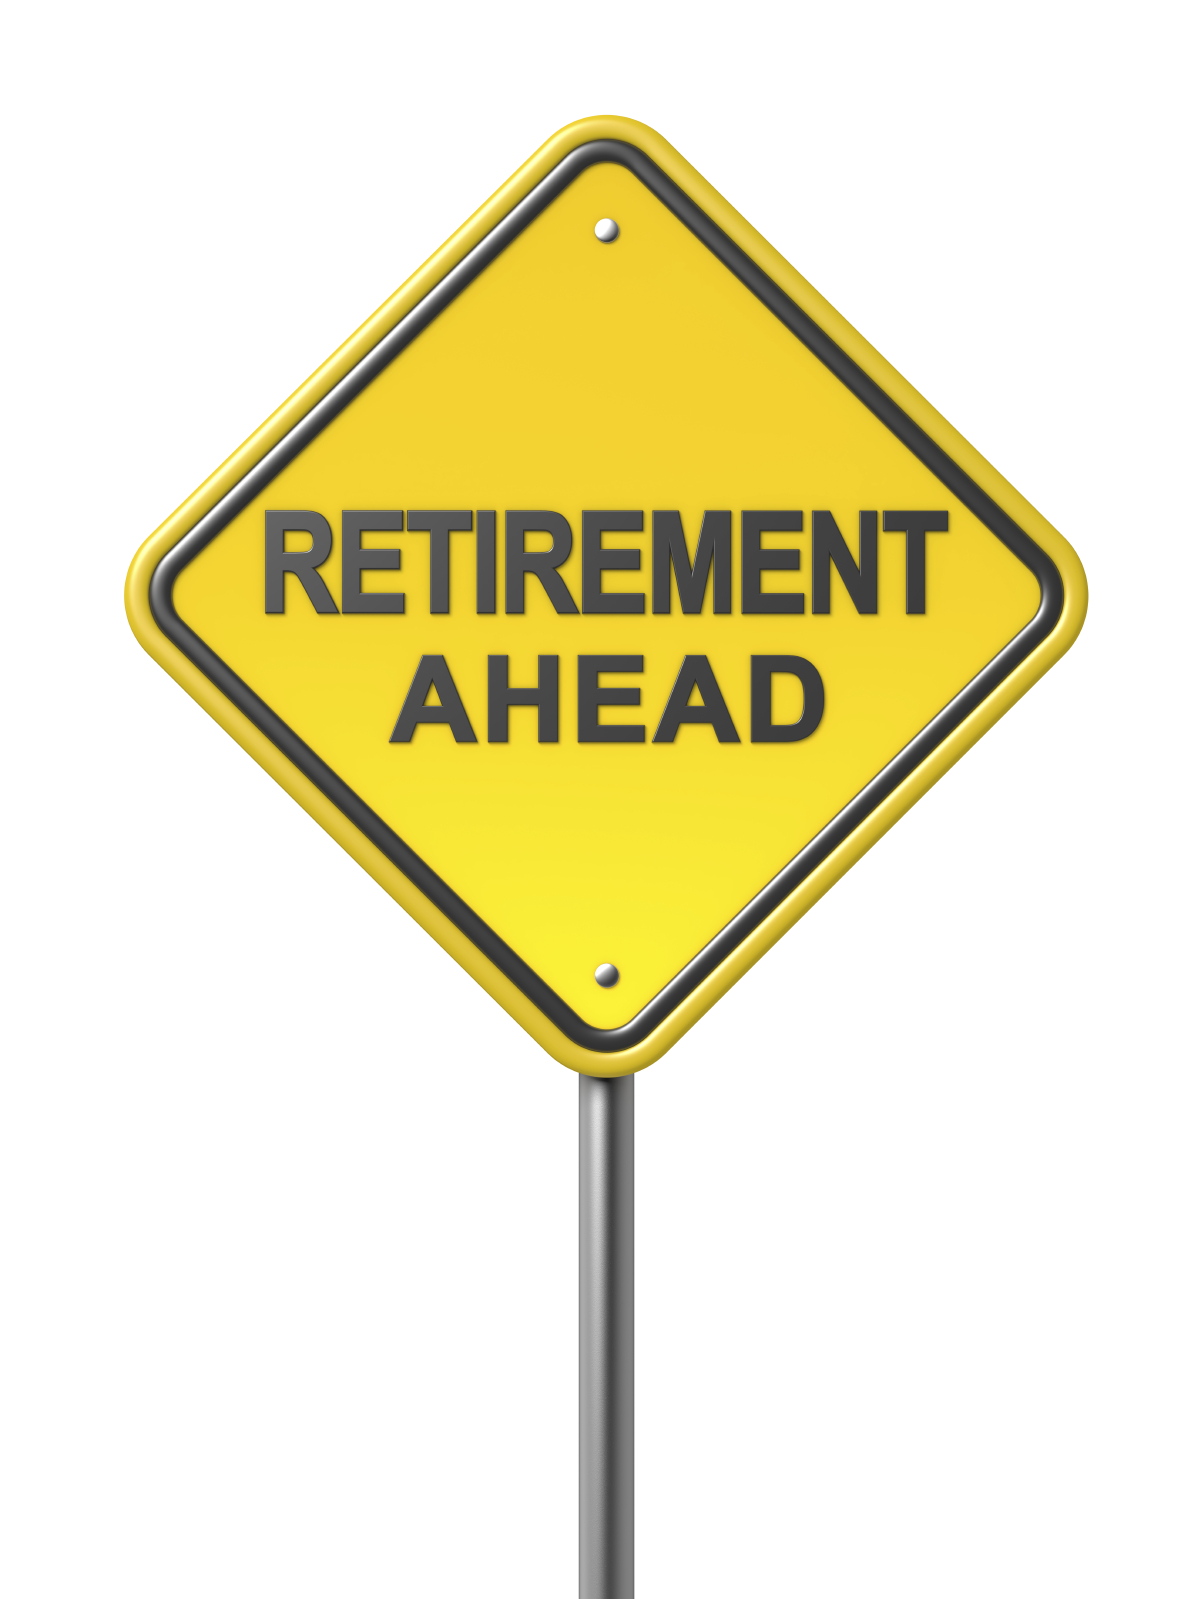 FERS Retirement Plan Maximization